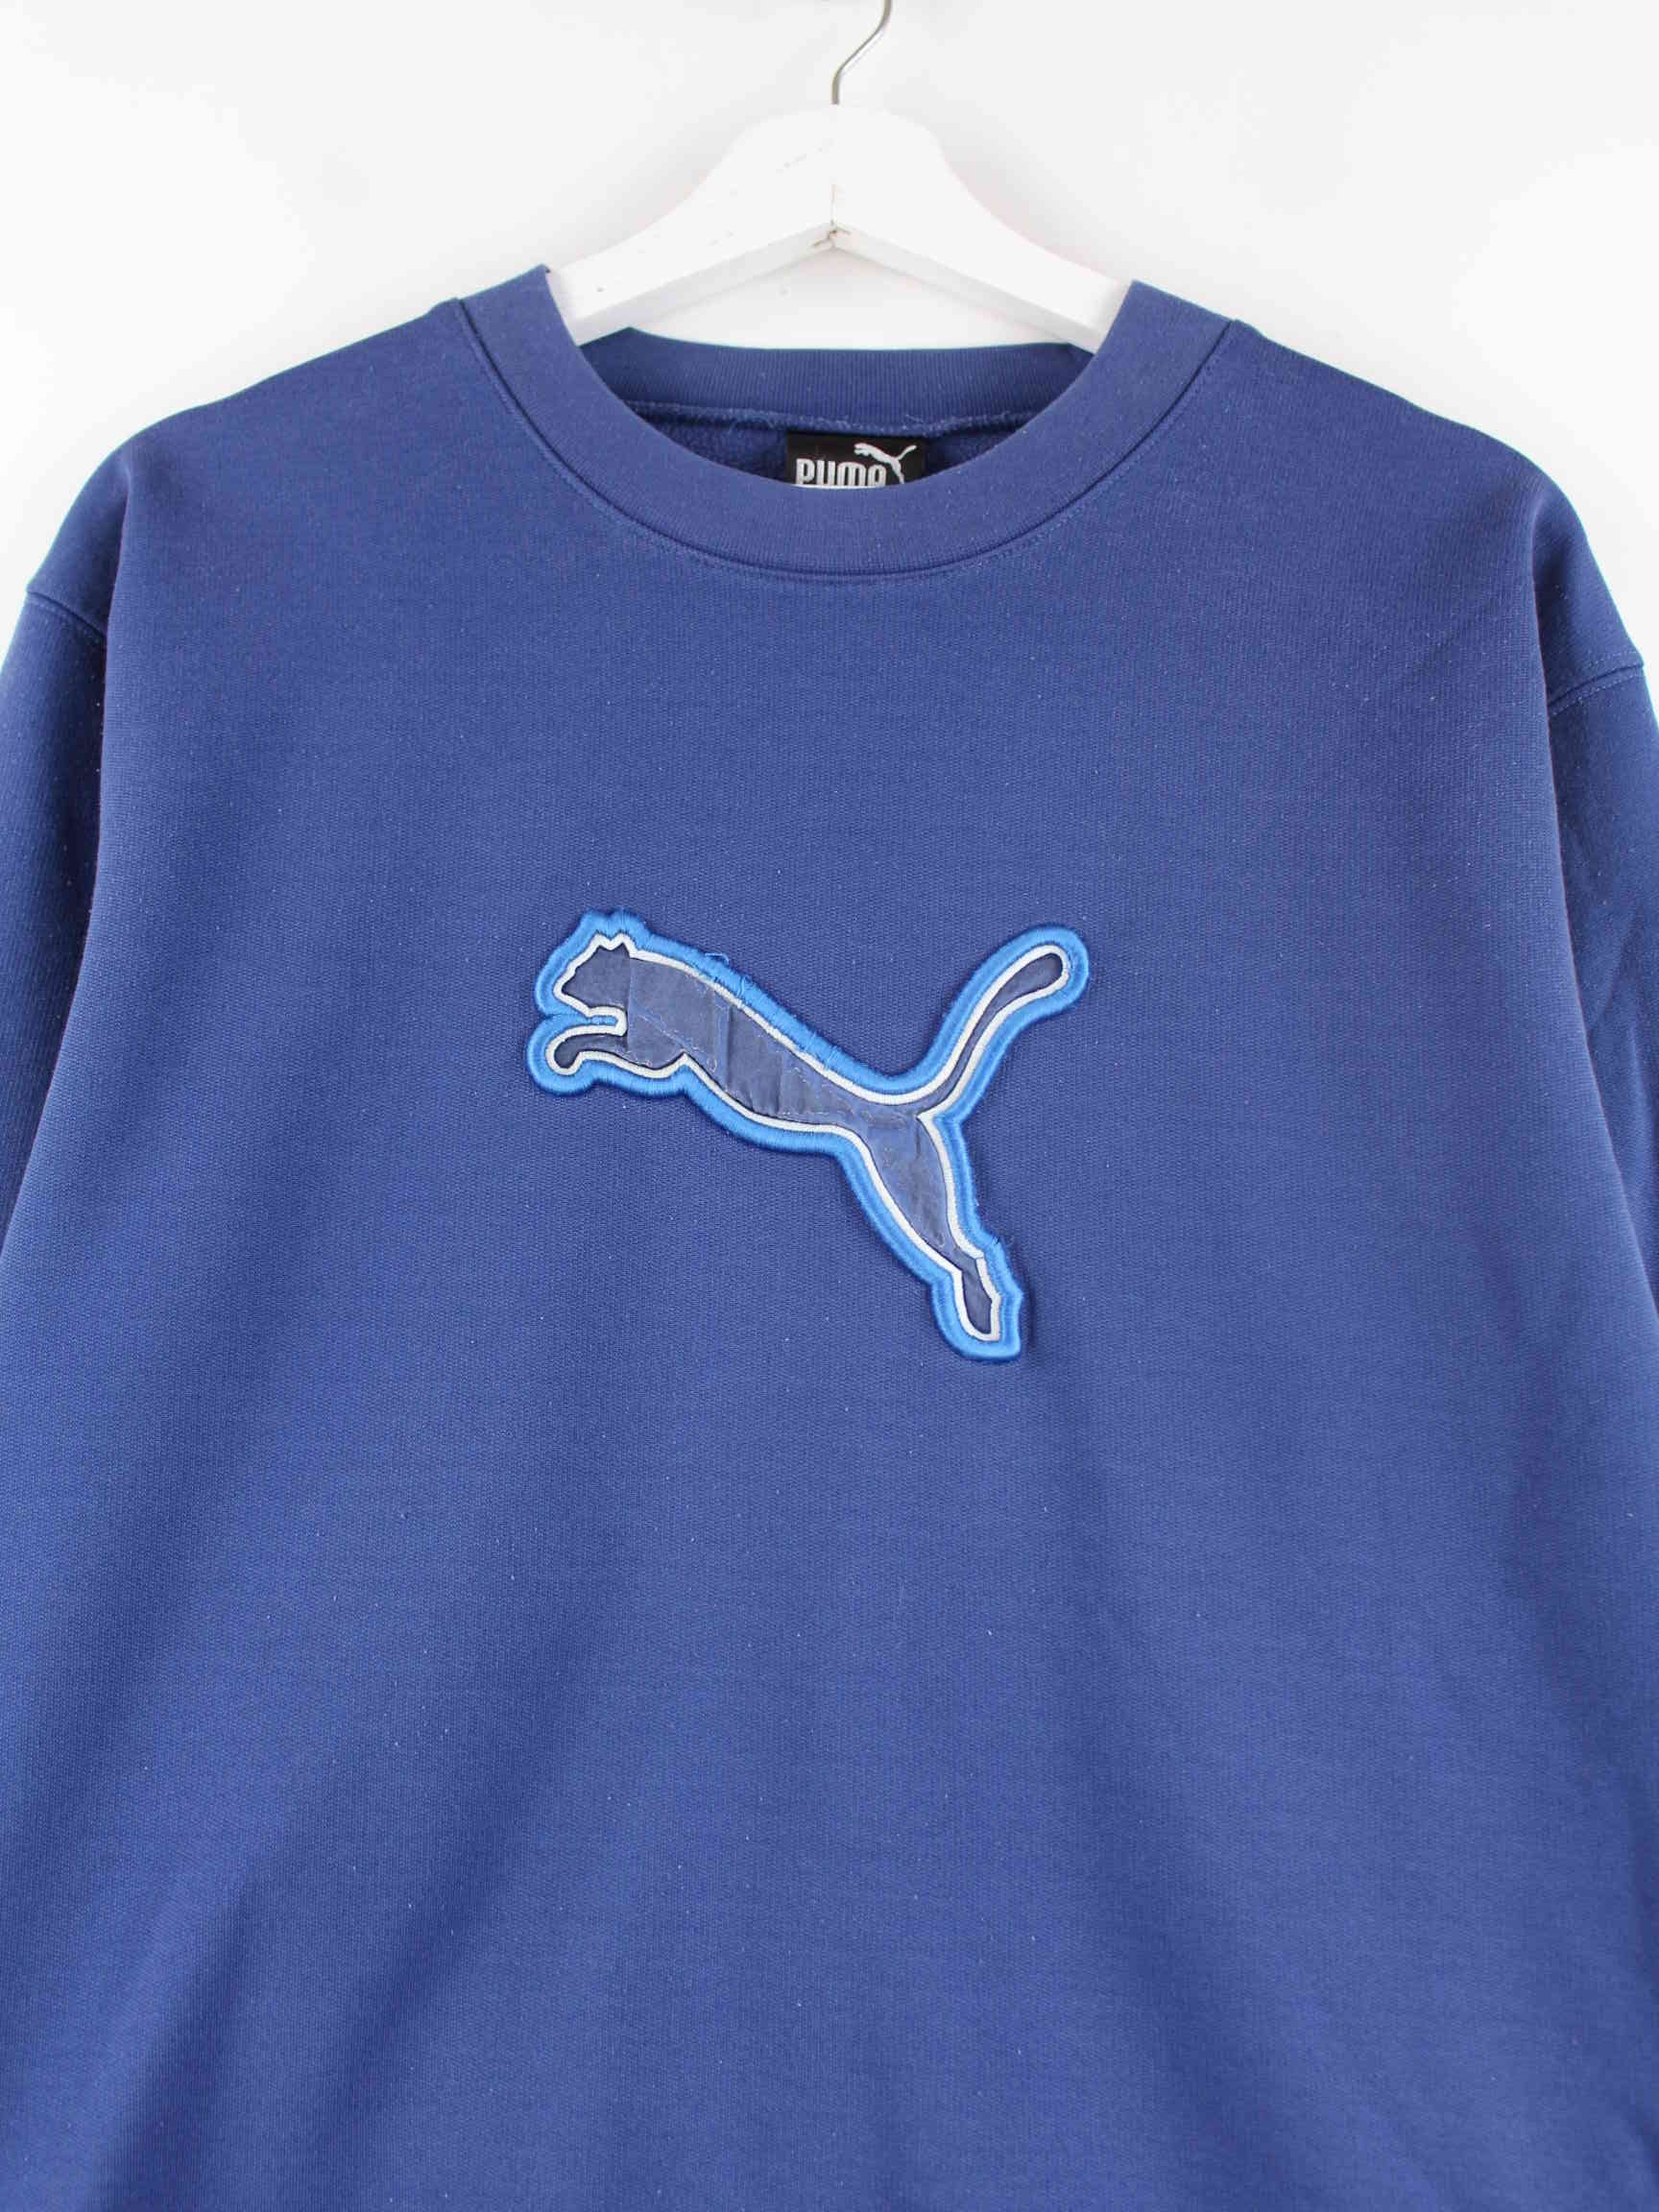 Puma 90s Vintage Logo Embroidered Sweater Blau M (detail image 1)